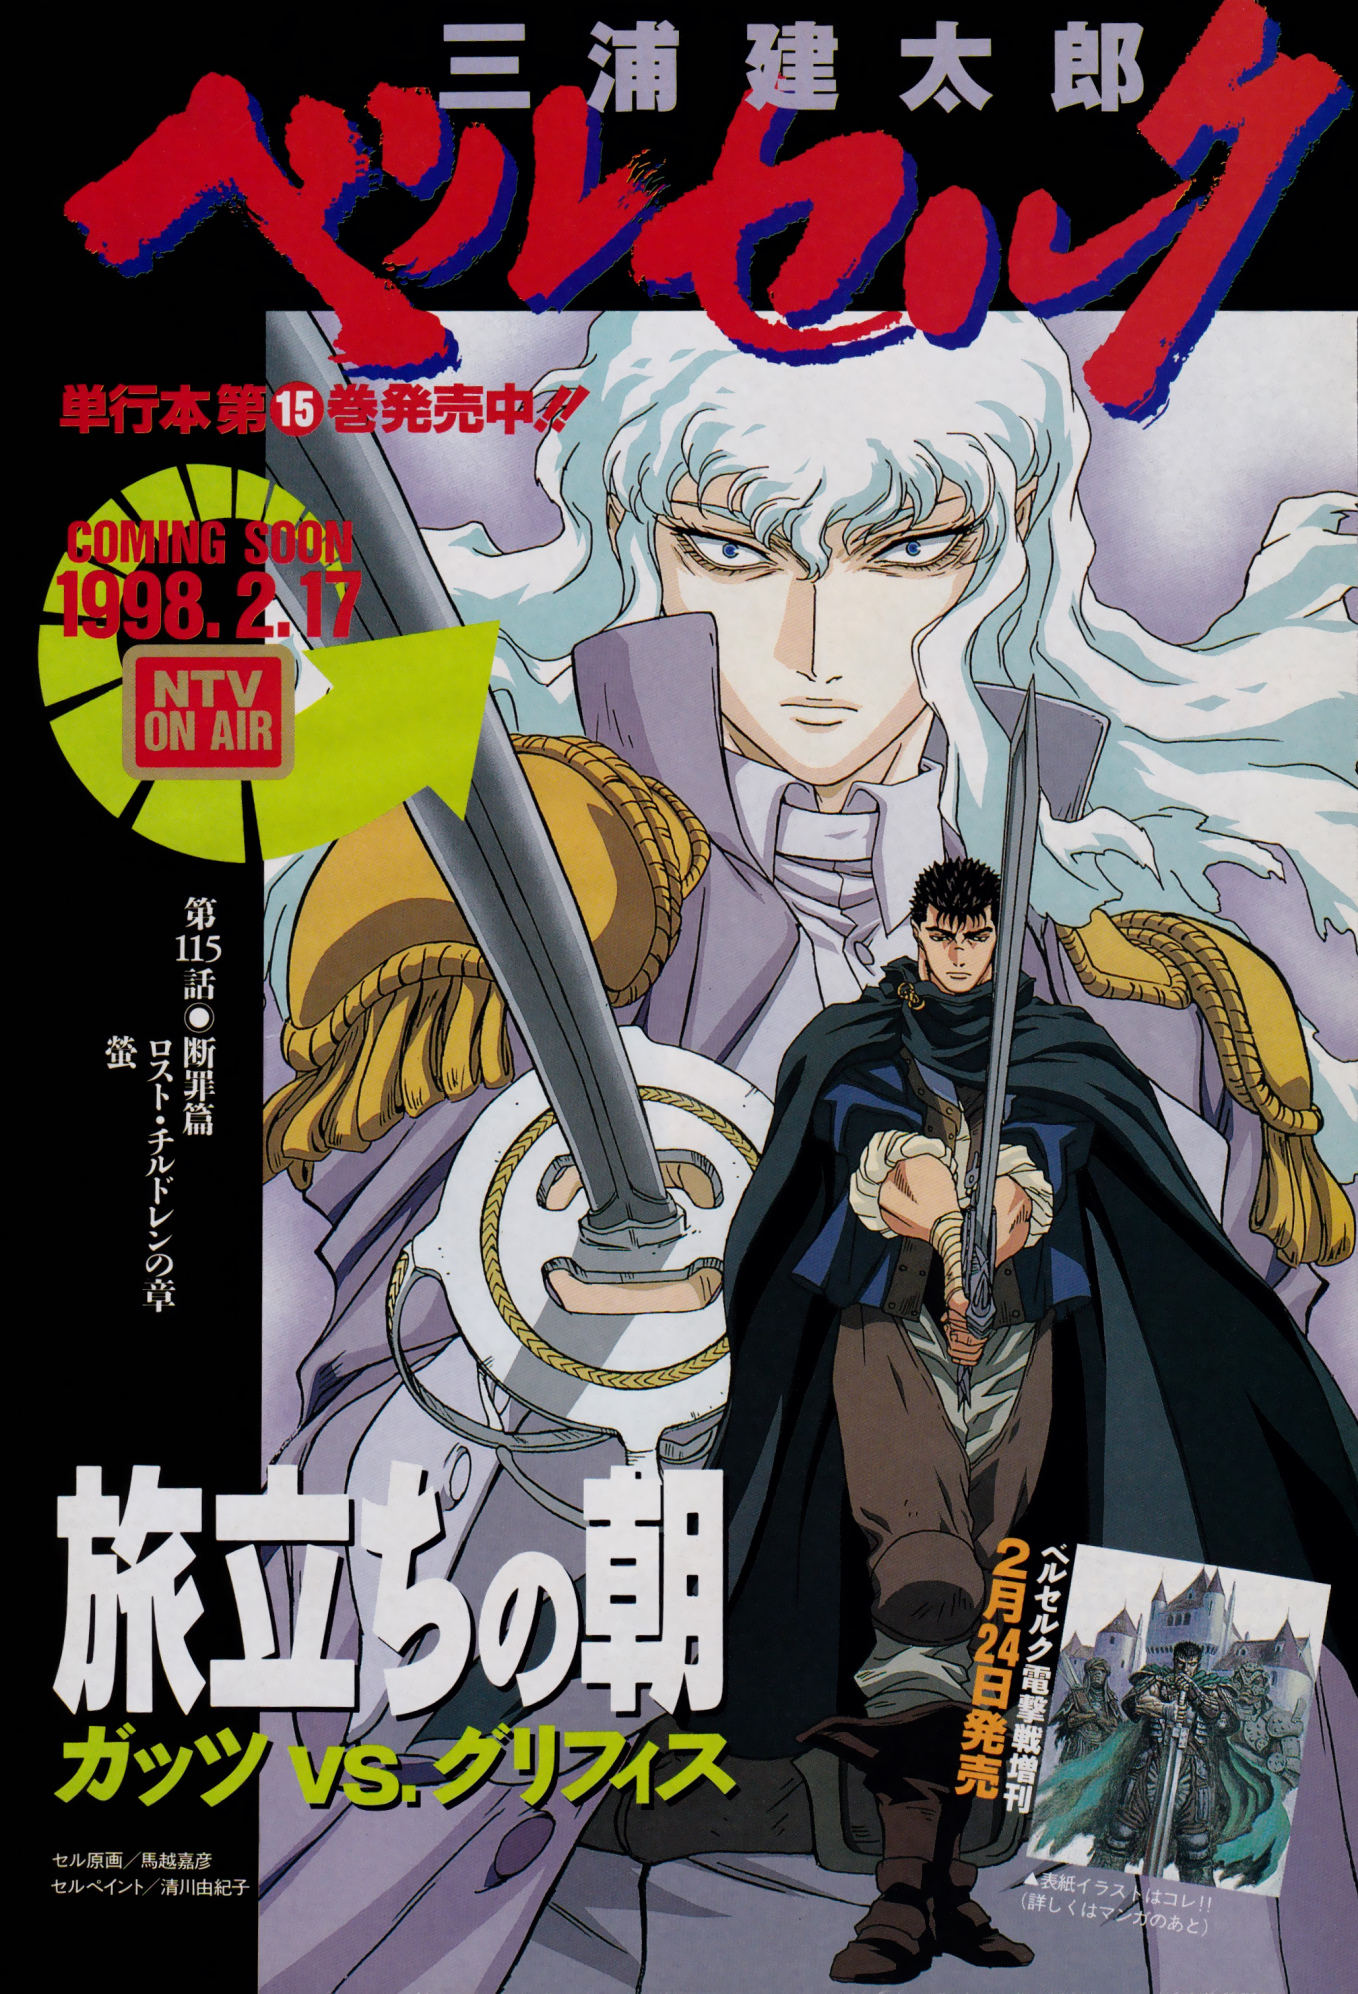 Kentaro Miura Art ⚔ on X: Berserk 1997 Anime is coming to